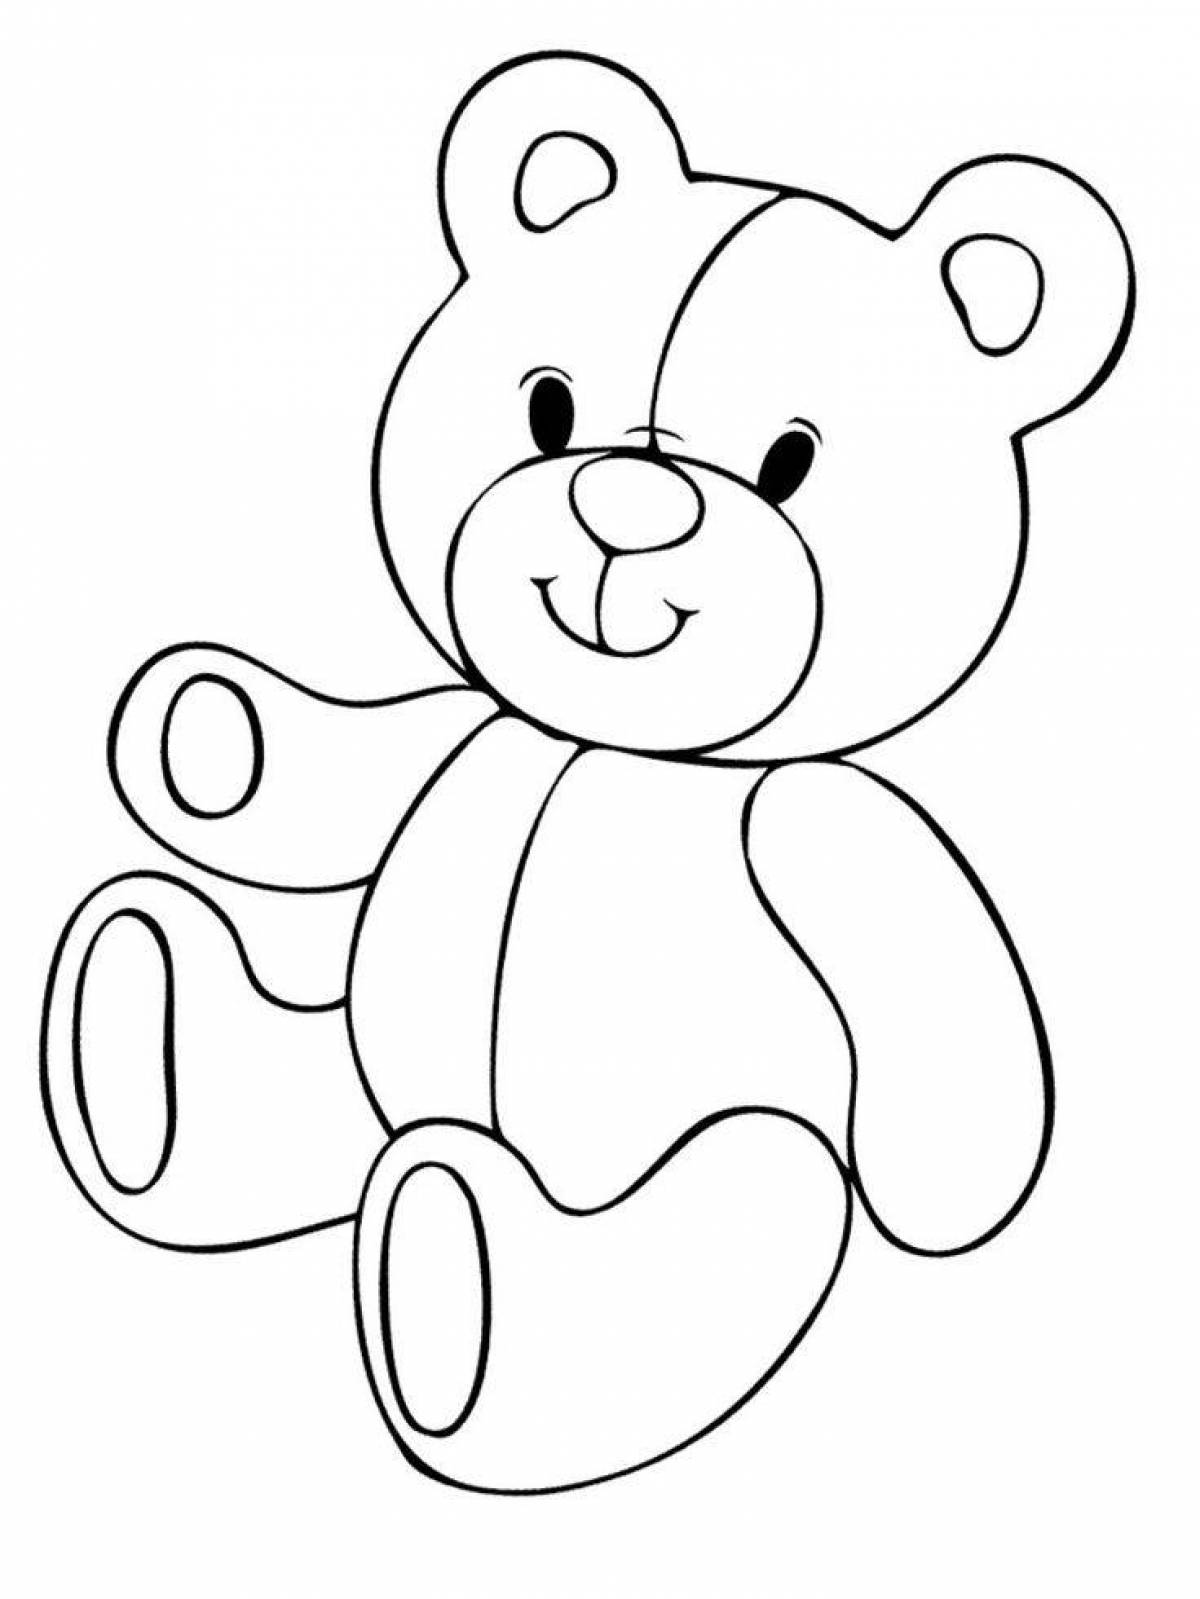 Joyful teddy bear coloring book for 3-4 year olds